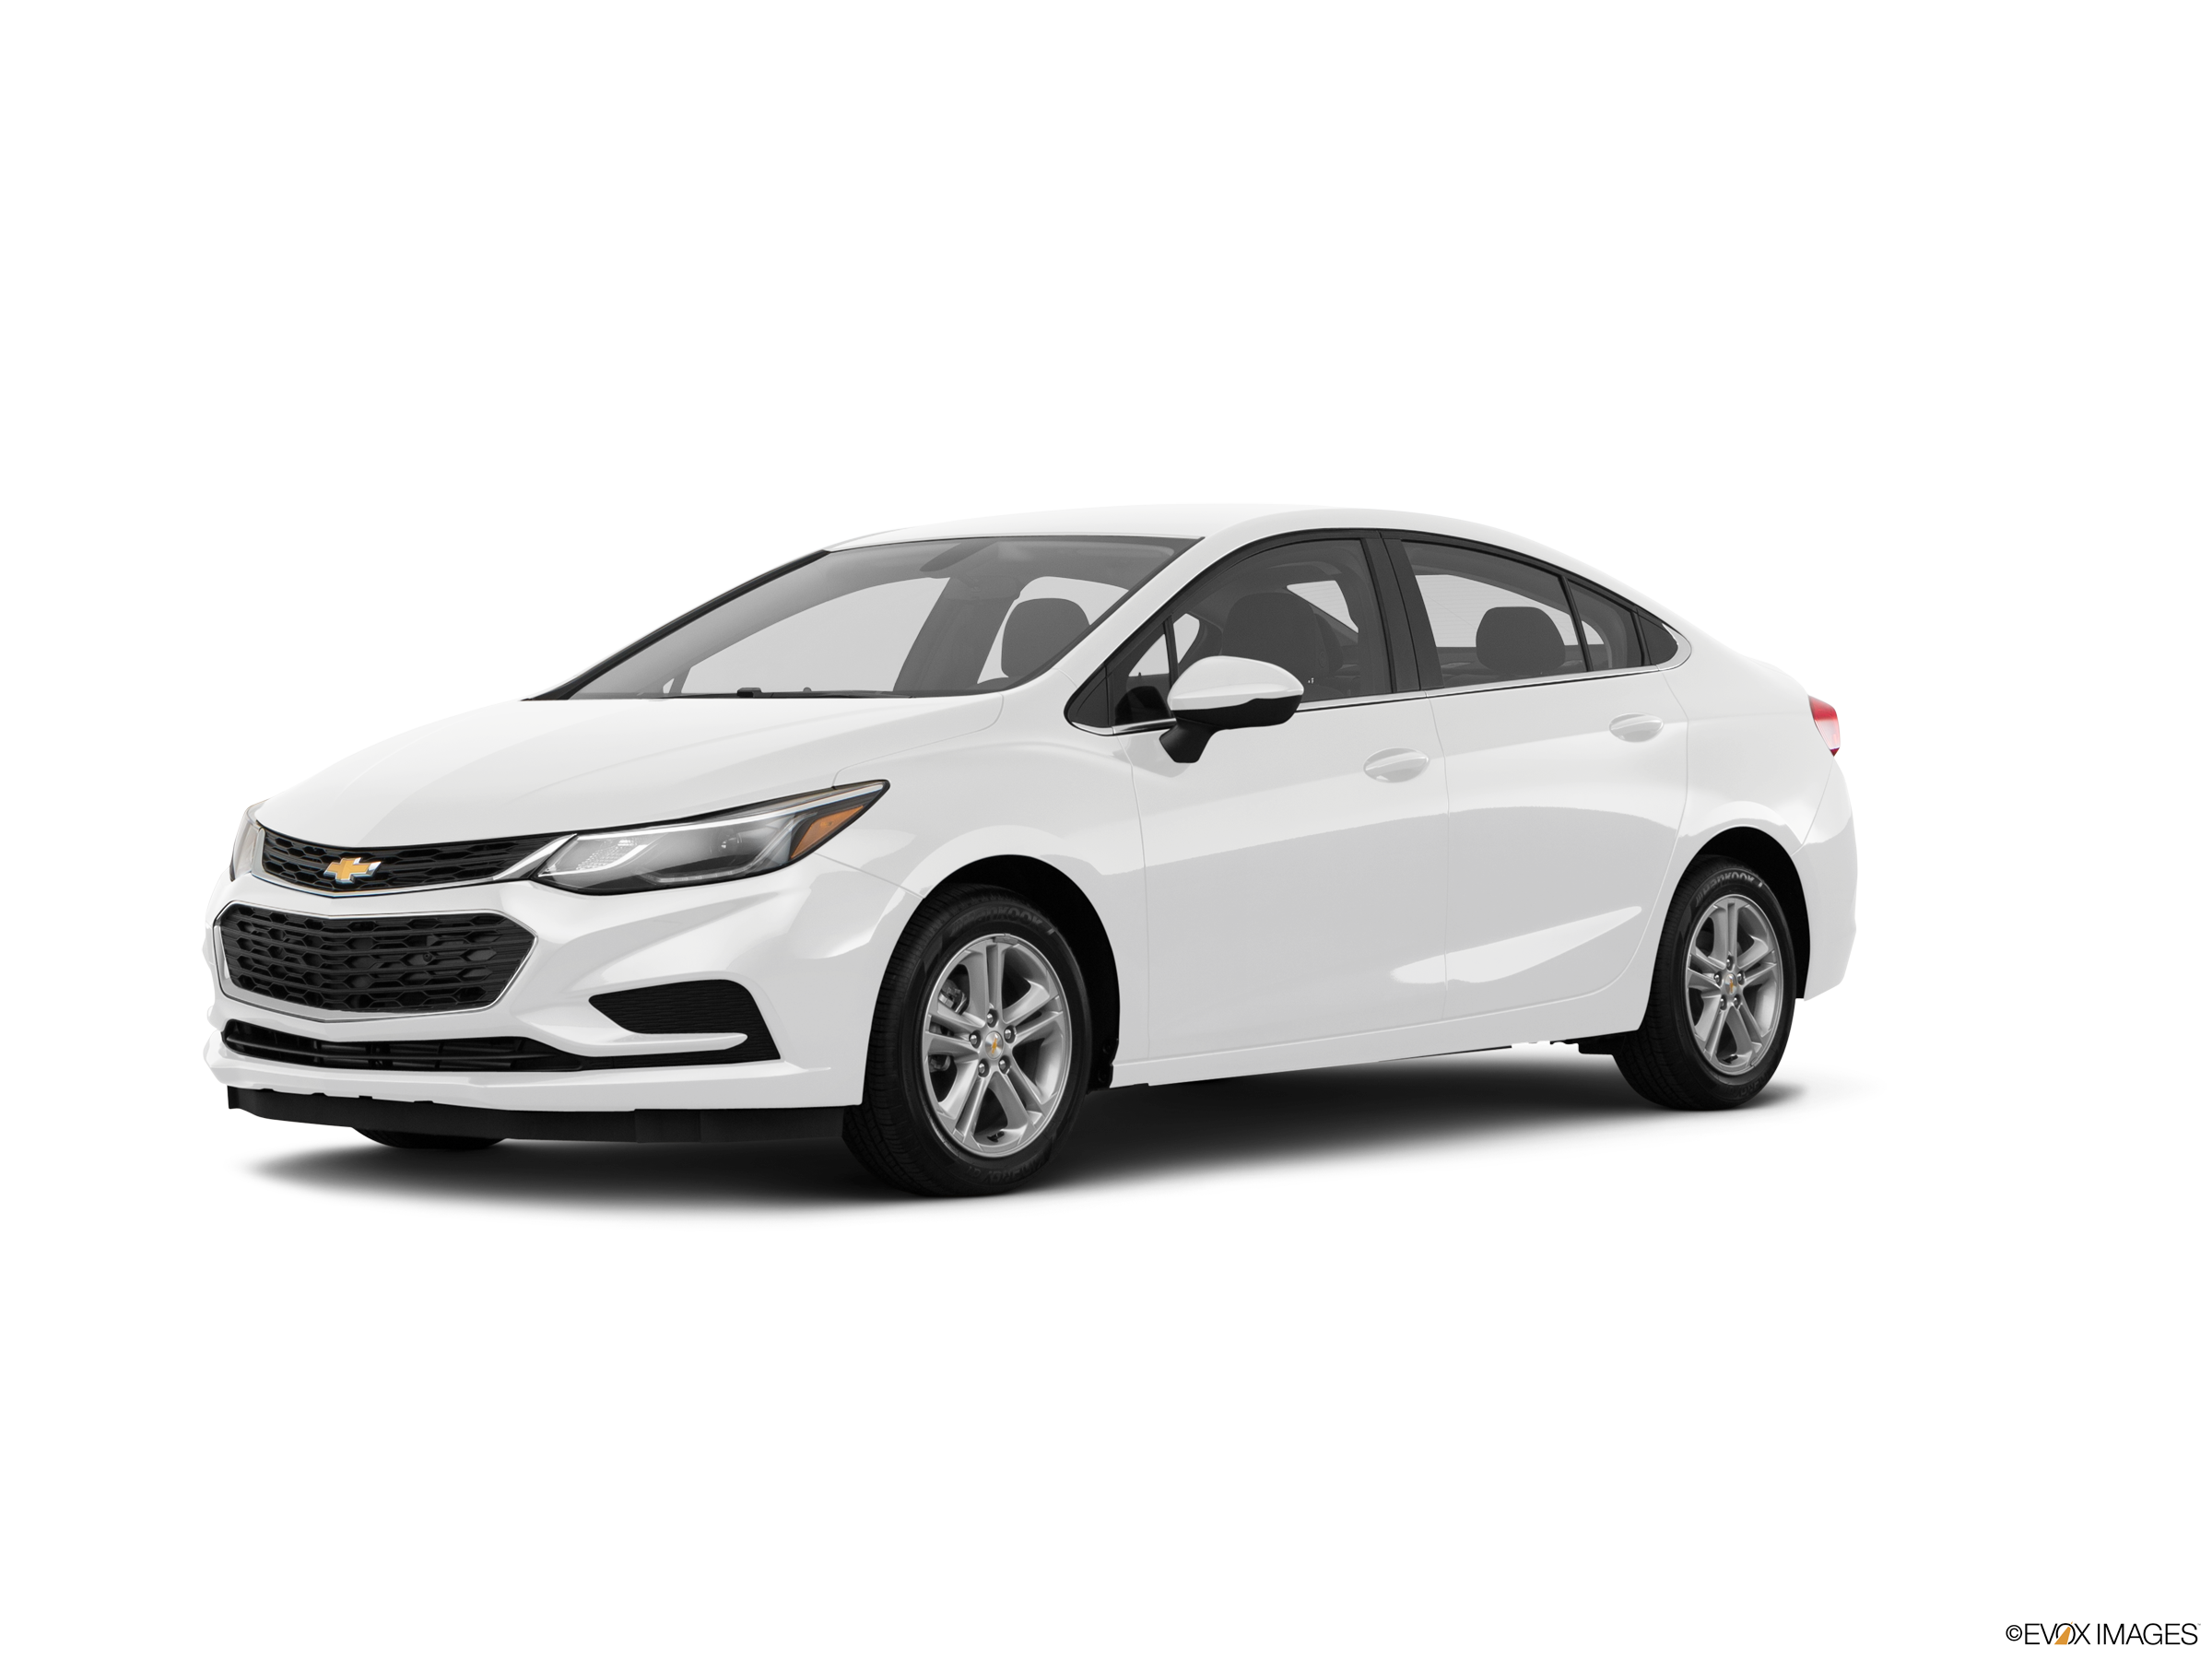 2017 Chevrolet Cruze Price, Value, Ratings & Reviews